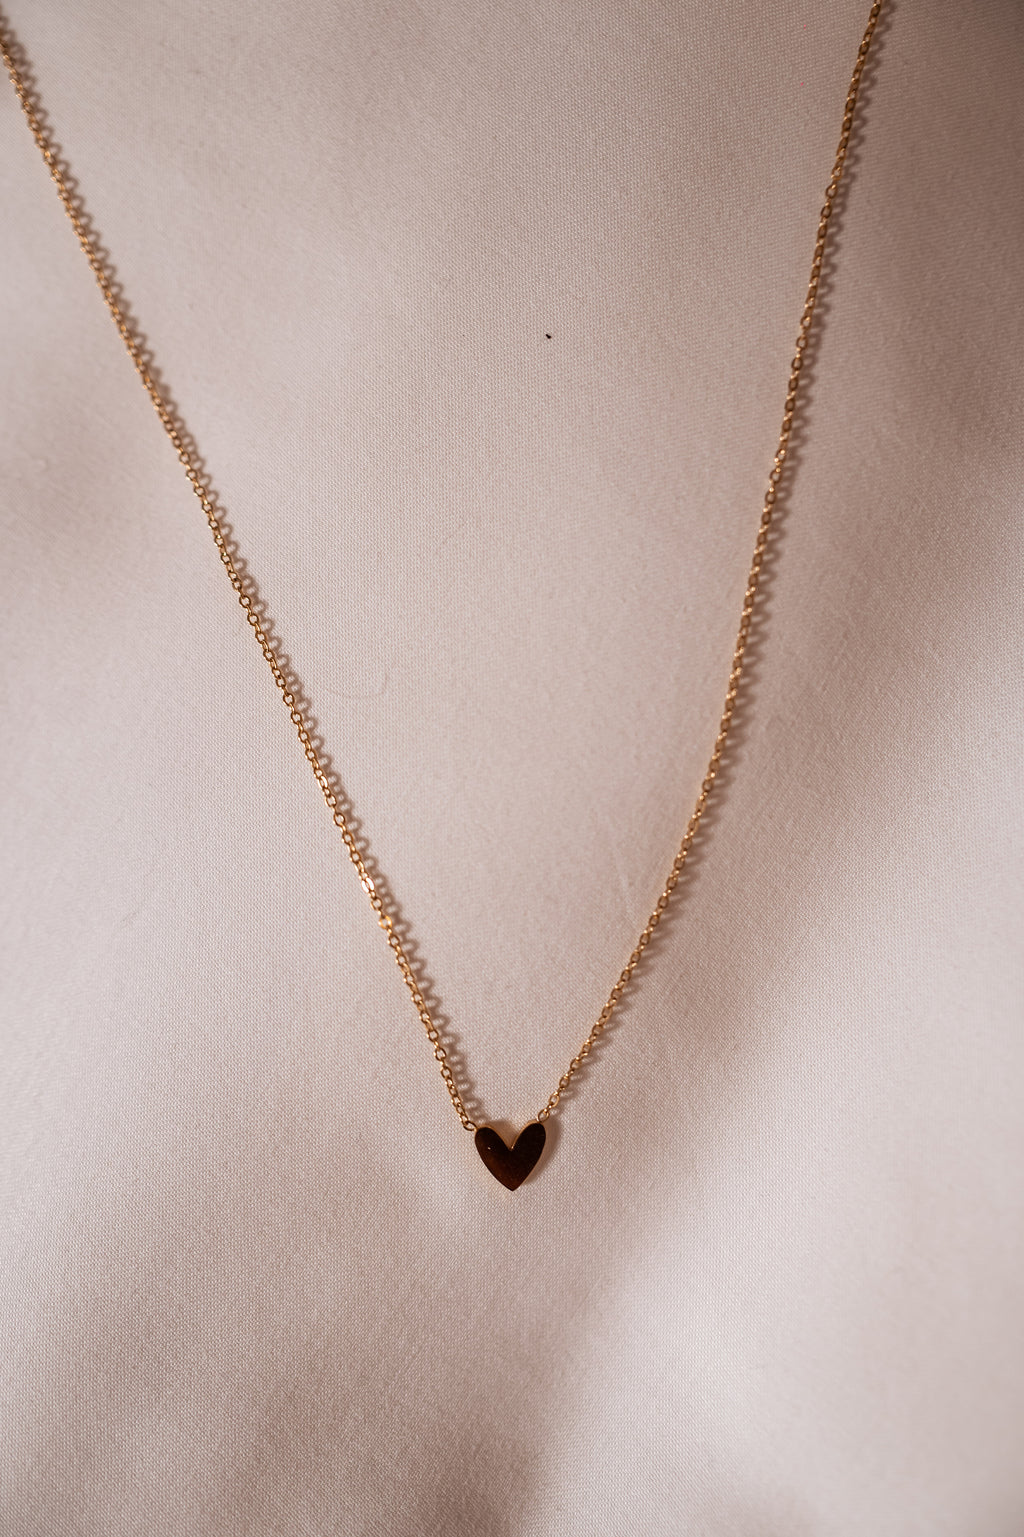 Henri necklace - Golden